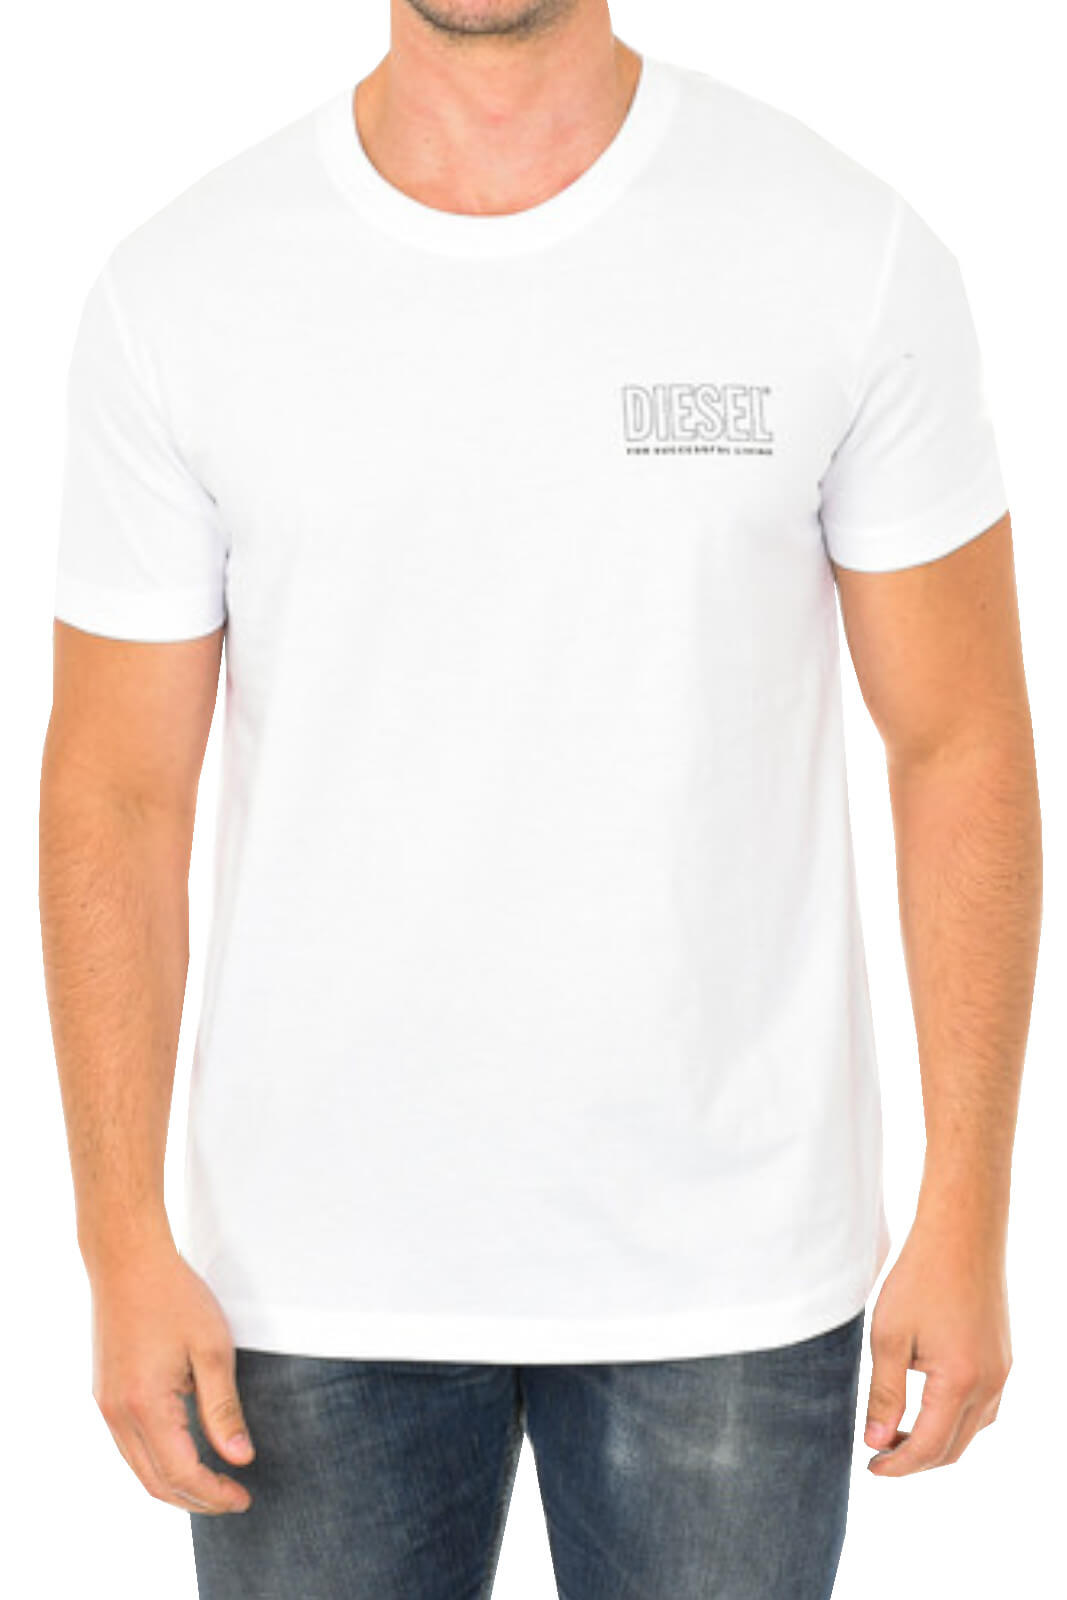 Diesel Men's T shirt with logo